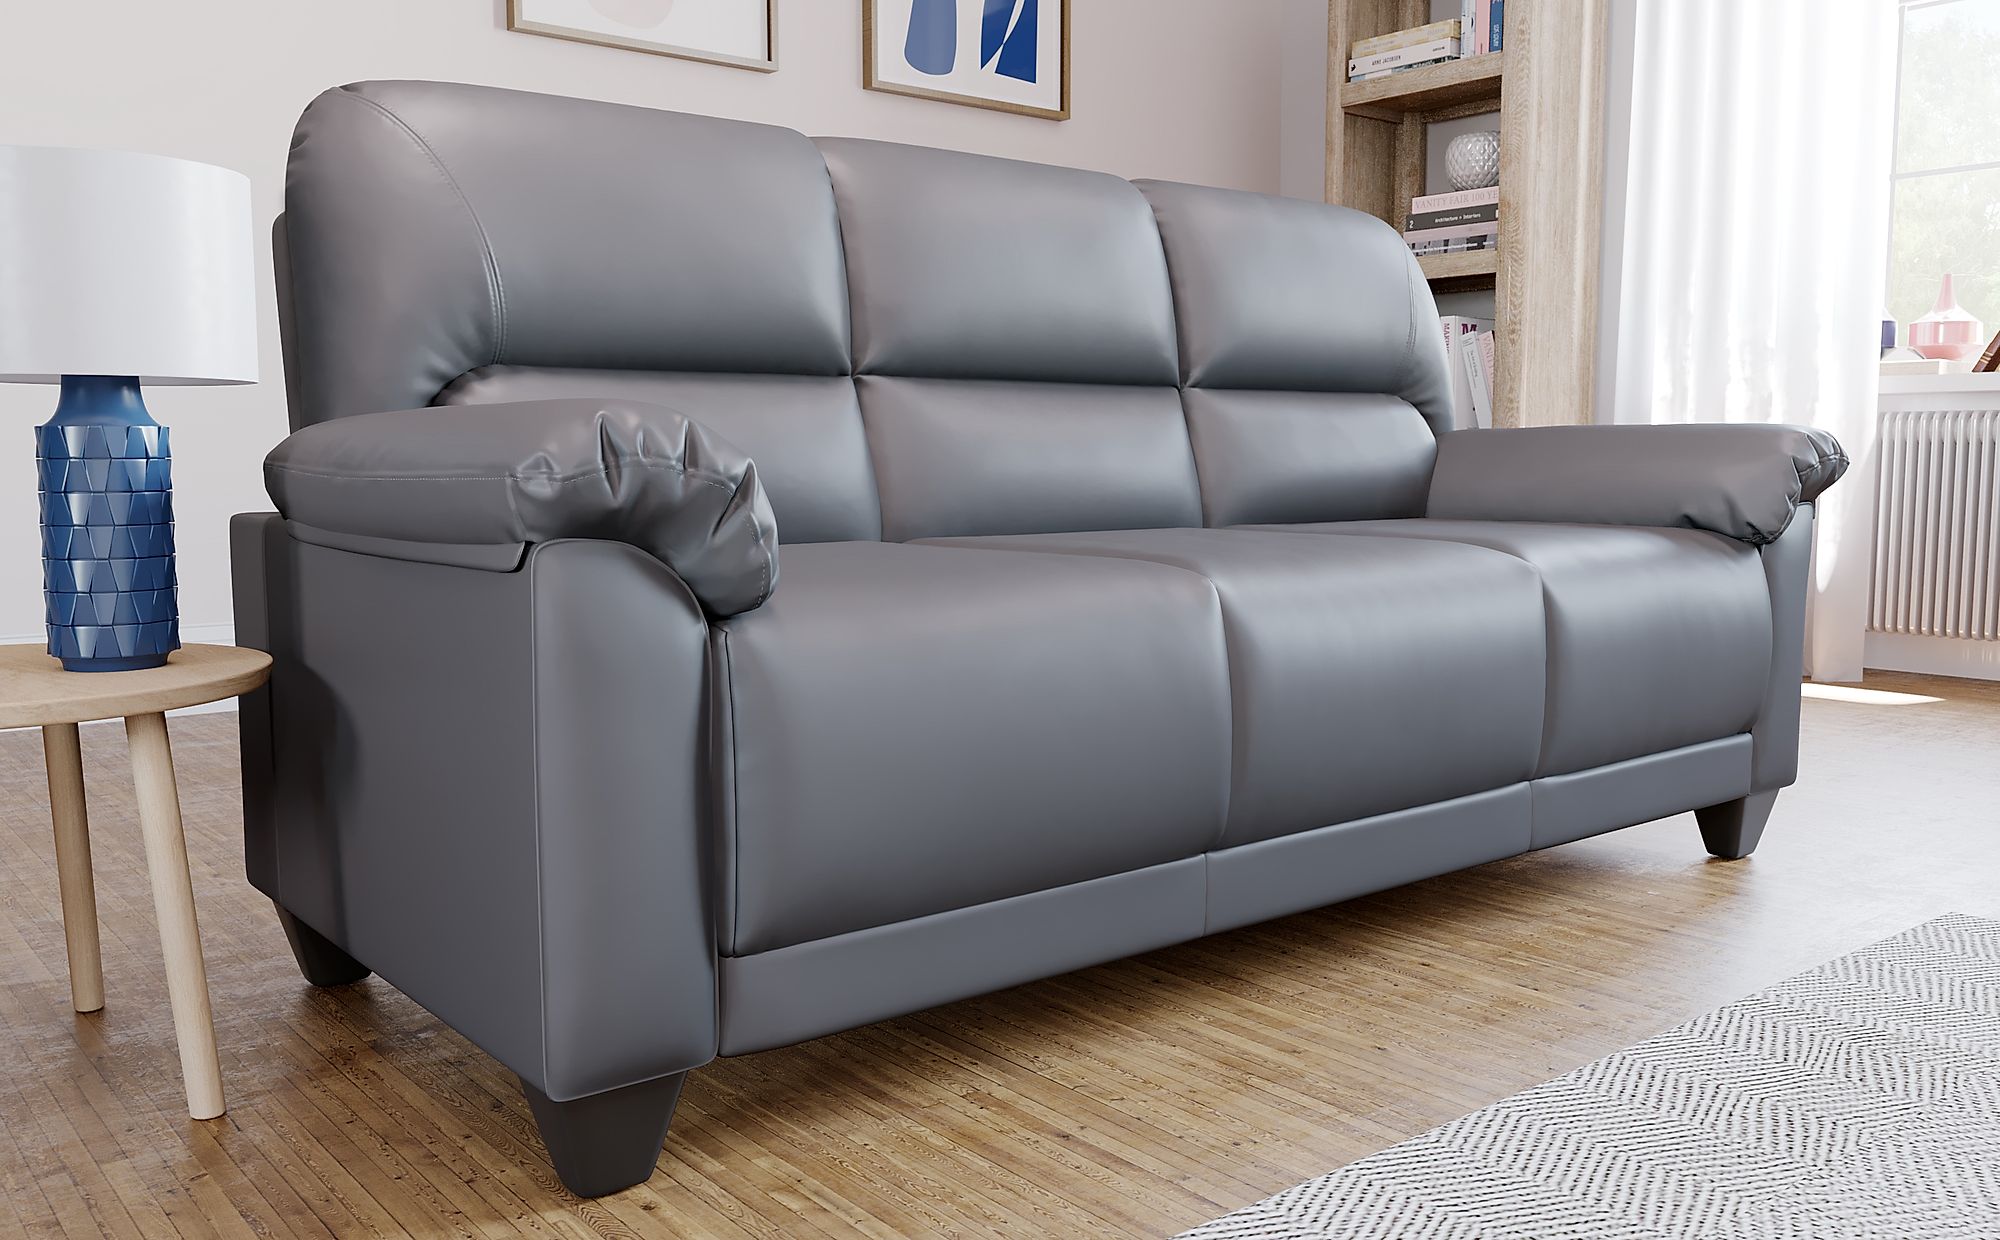 3 seater grey leather sofa